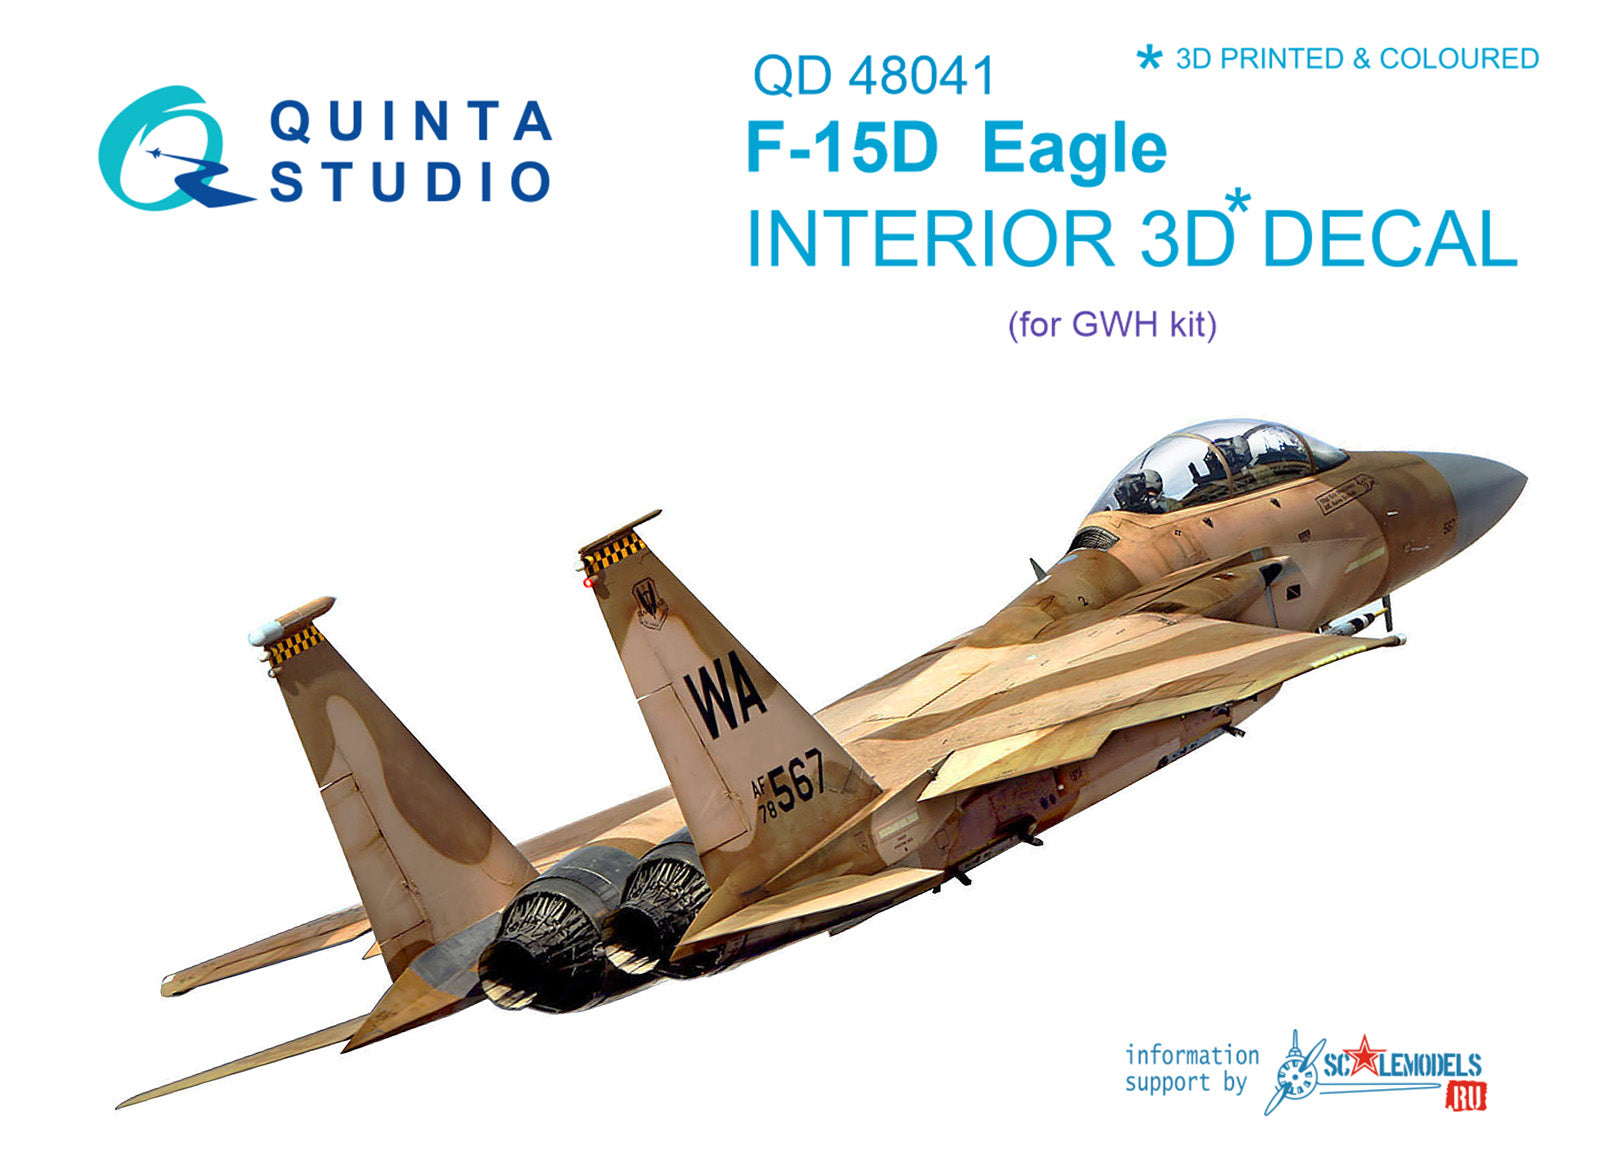 Quinta Studio - 1/48 F-15D - QD48041 for GWH kit